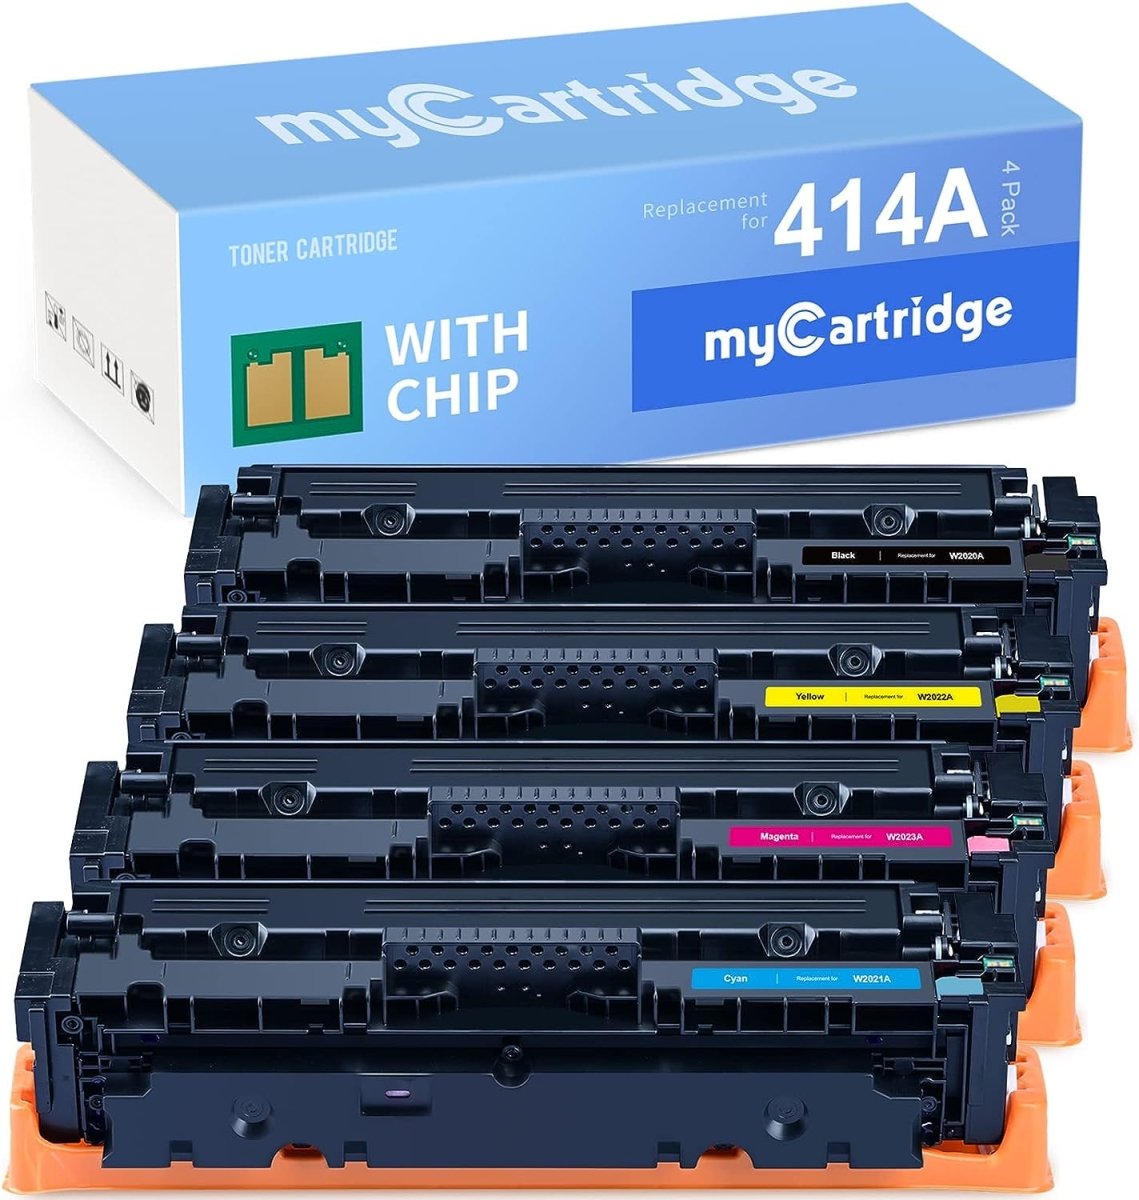 4 Lemero Toner Cartridges, with Chip